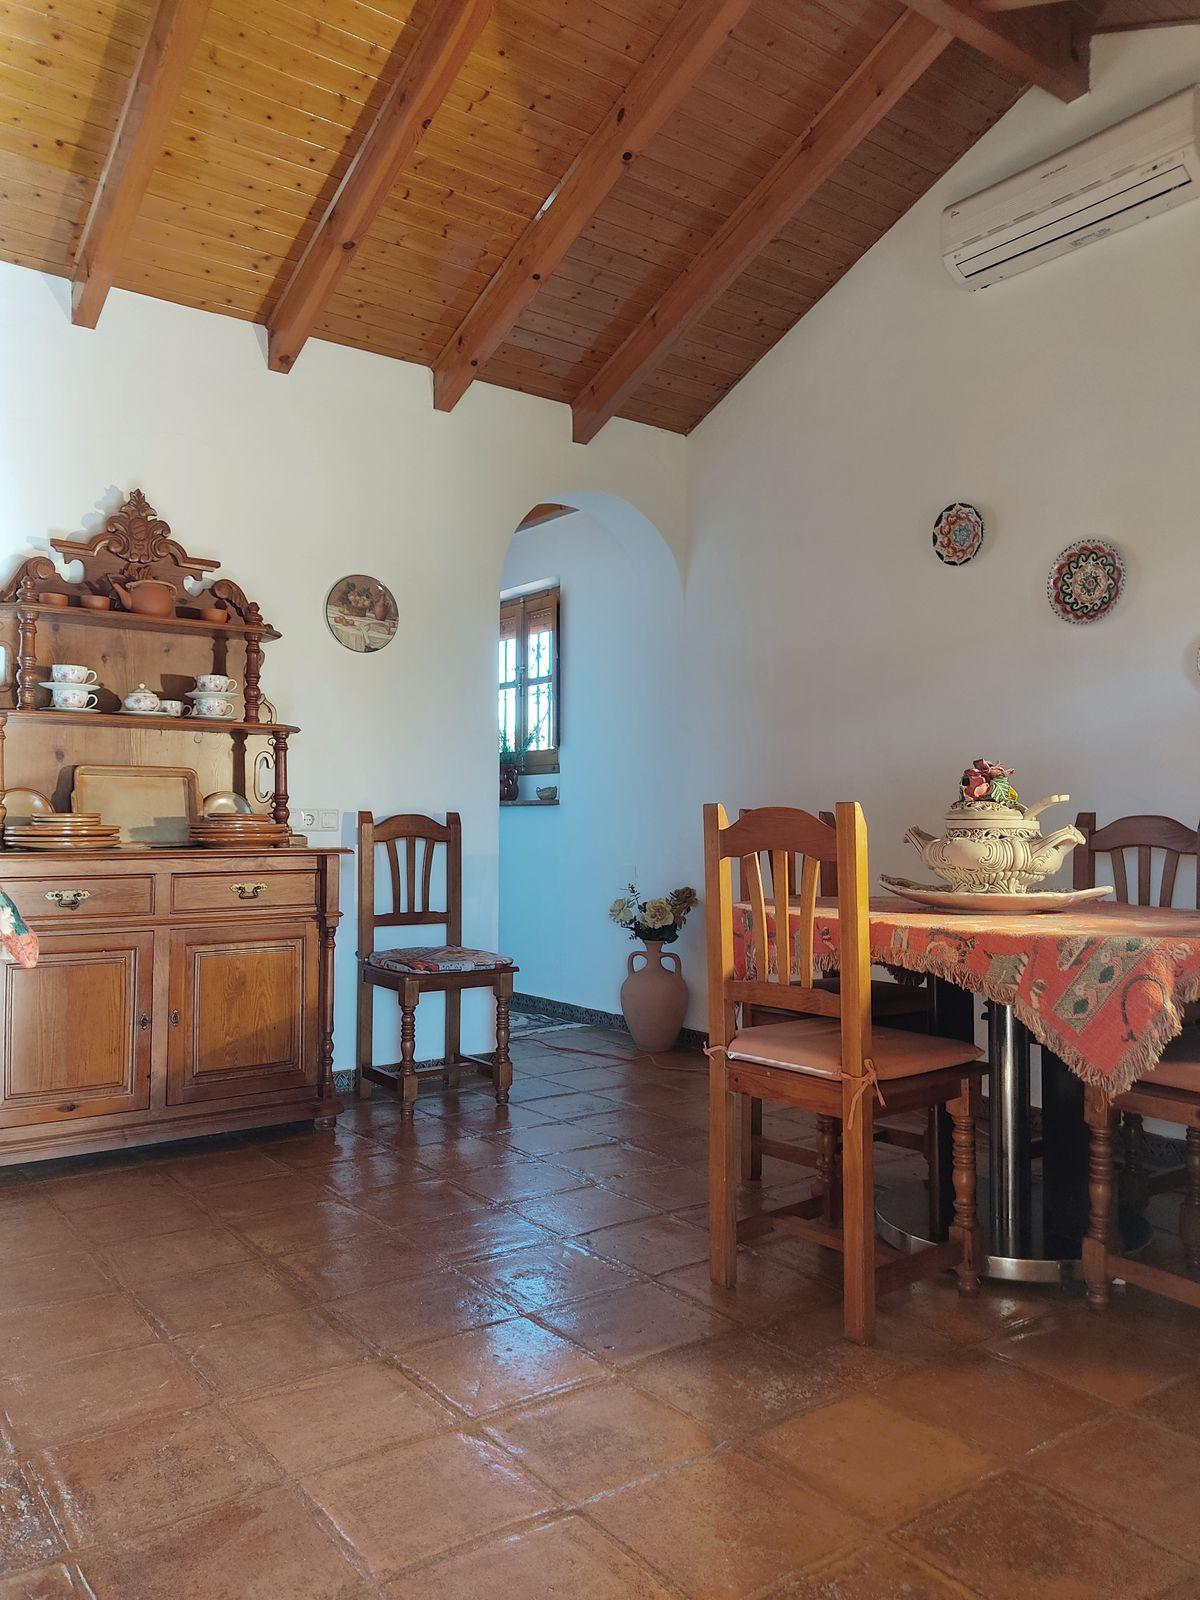 Villa Finca en La Cala de Mijas, Costa del Sol
